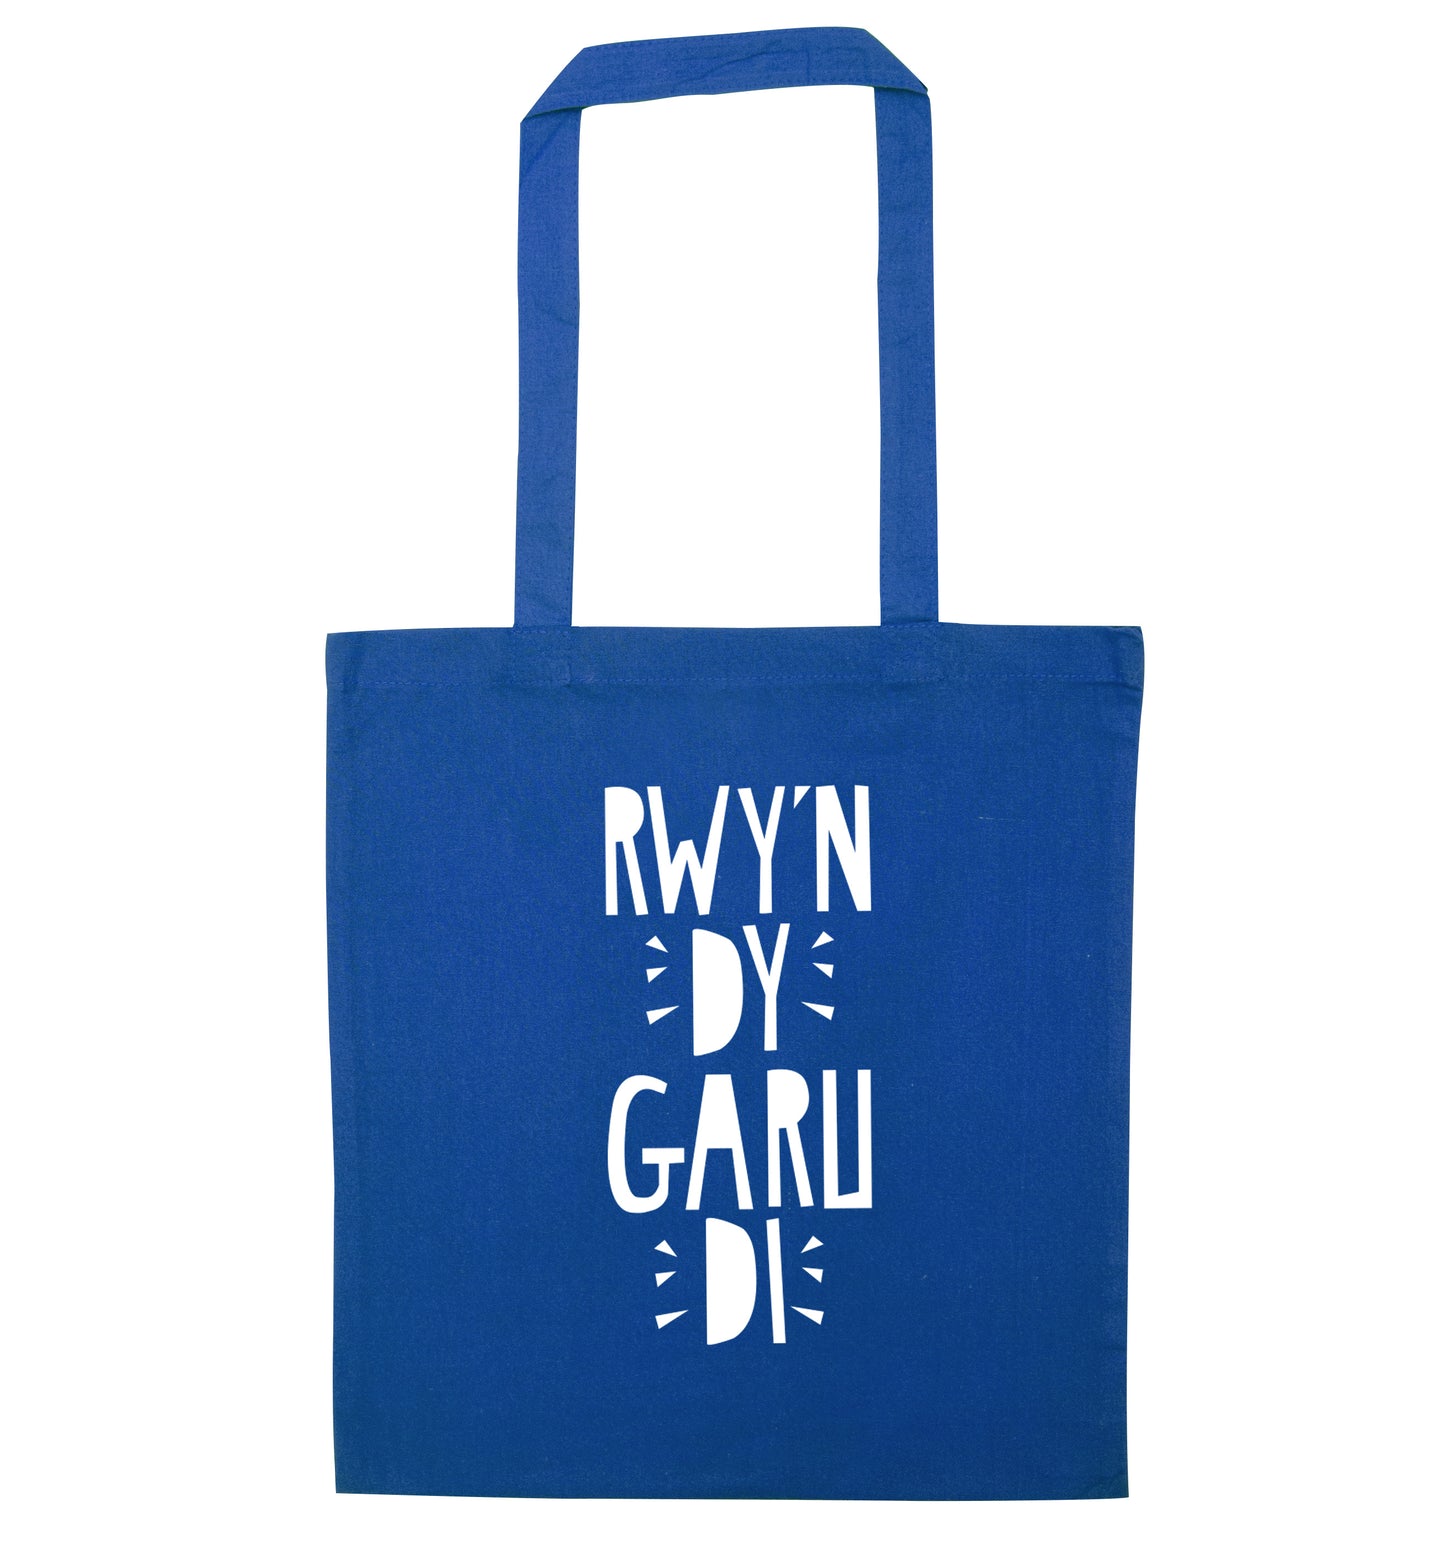 Rwy'n dy garu di - I love you blue tote bag